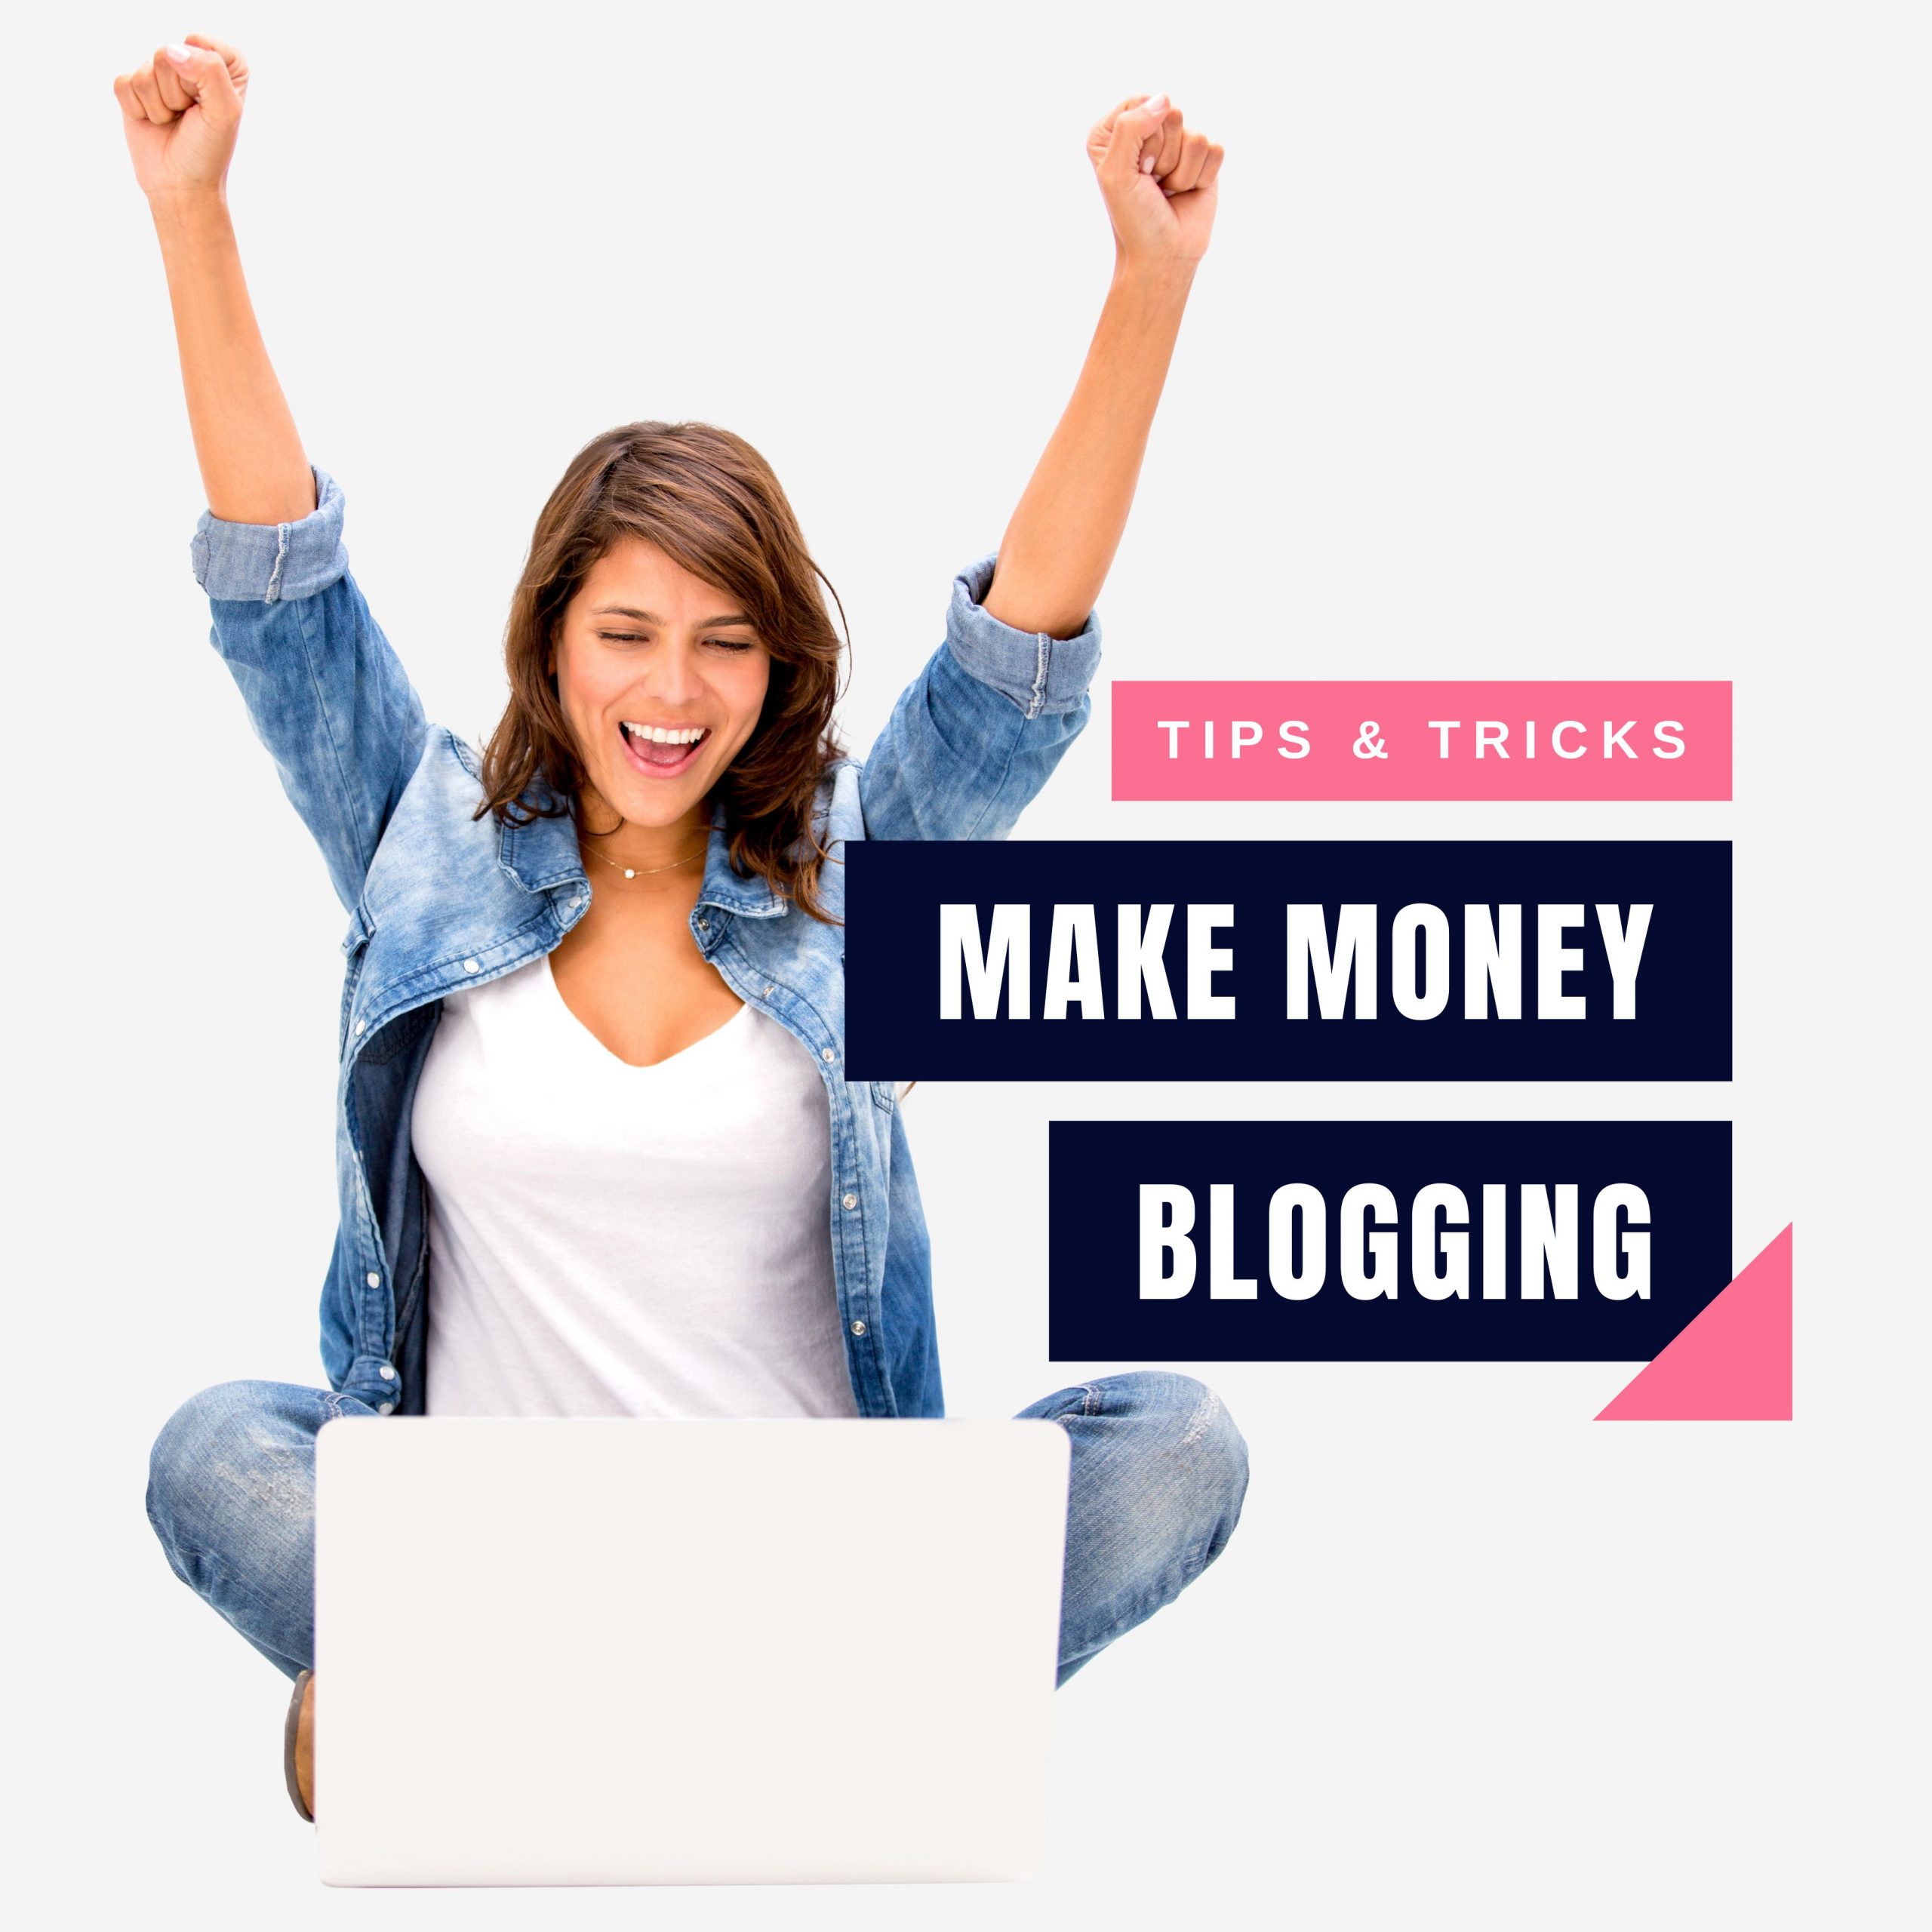 Make money blogging – tips and tricks.